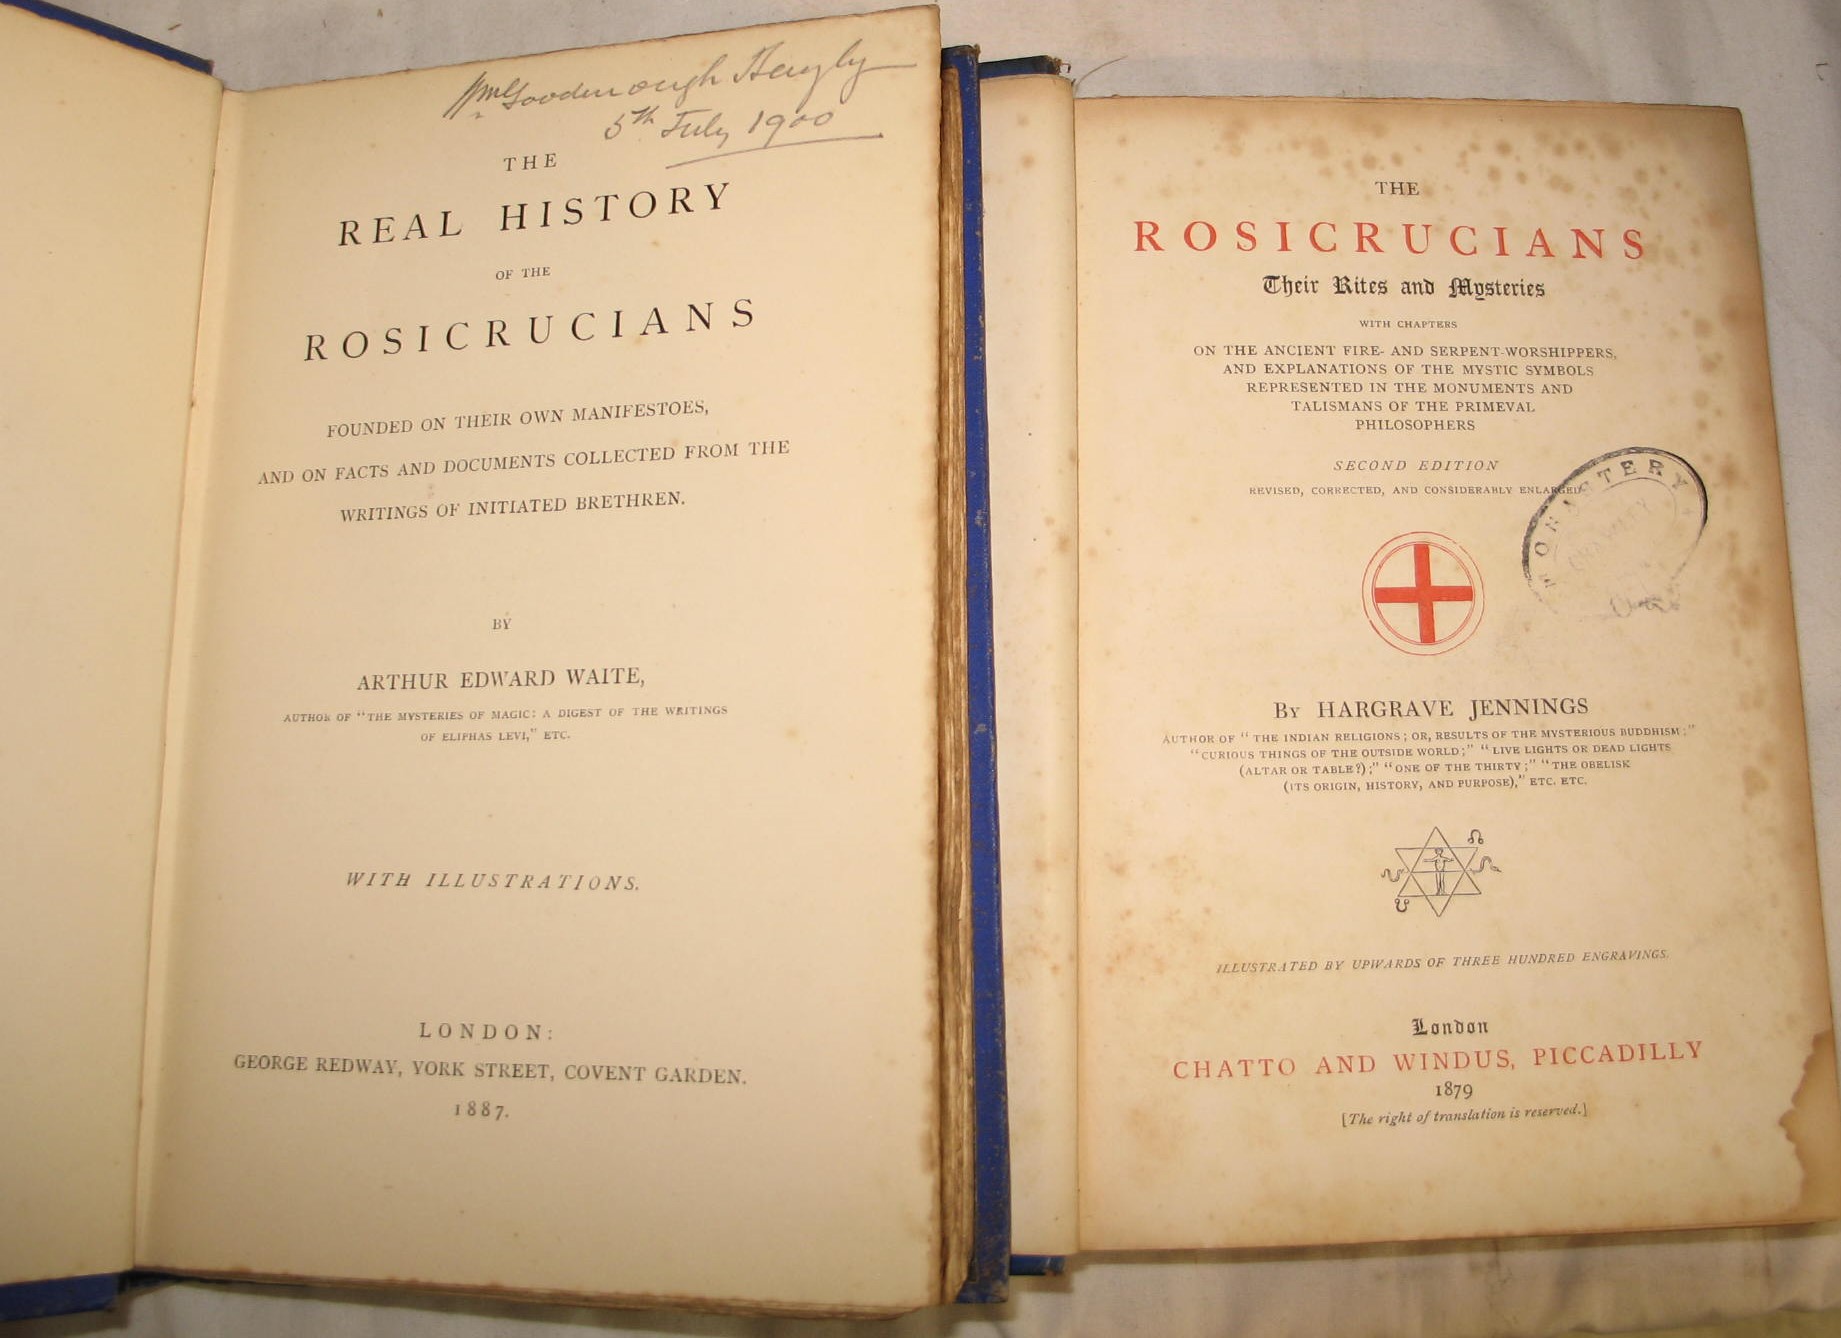 [ROSICRUCIANS] WAITE (A. E.) The Real History of the Rosicrucians, 8vo, illus., decorative cloth, - Image 2 of 2